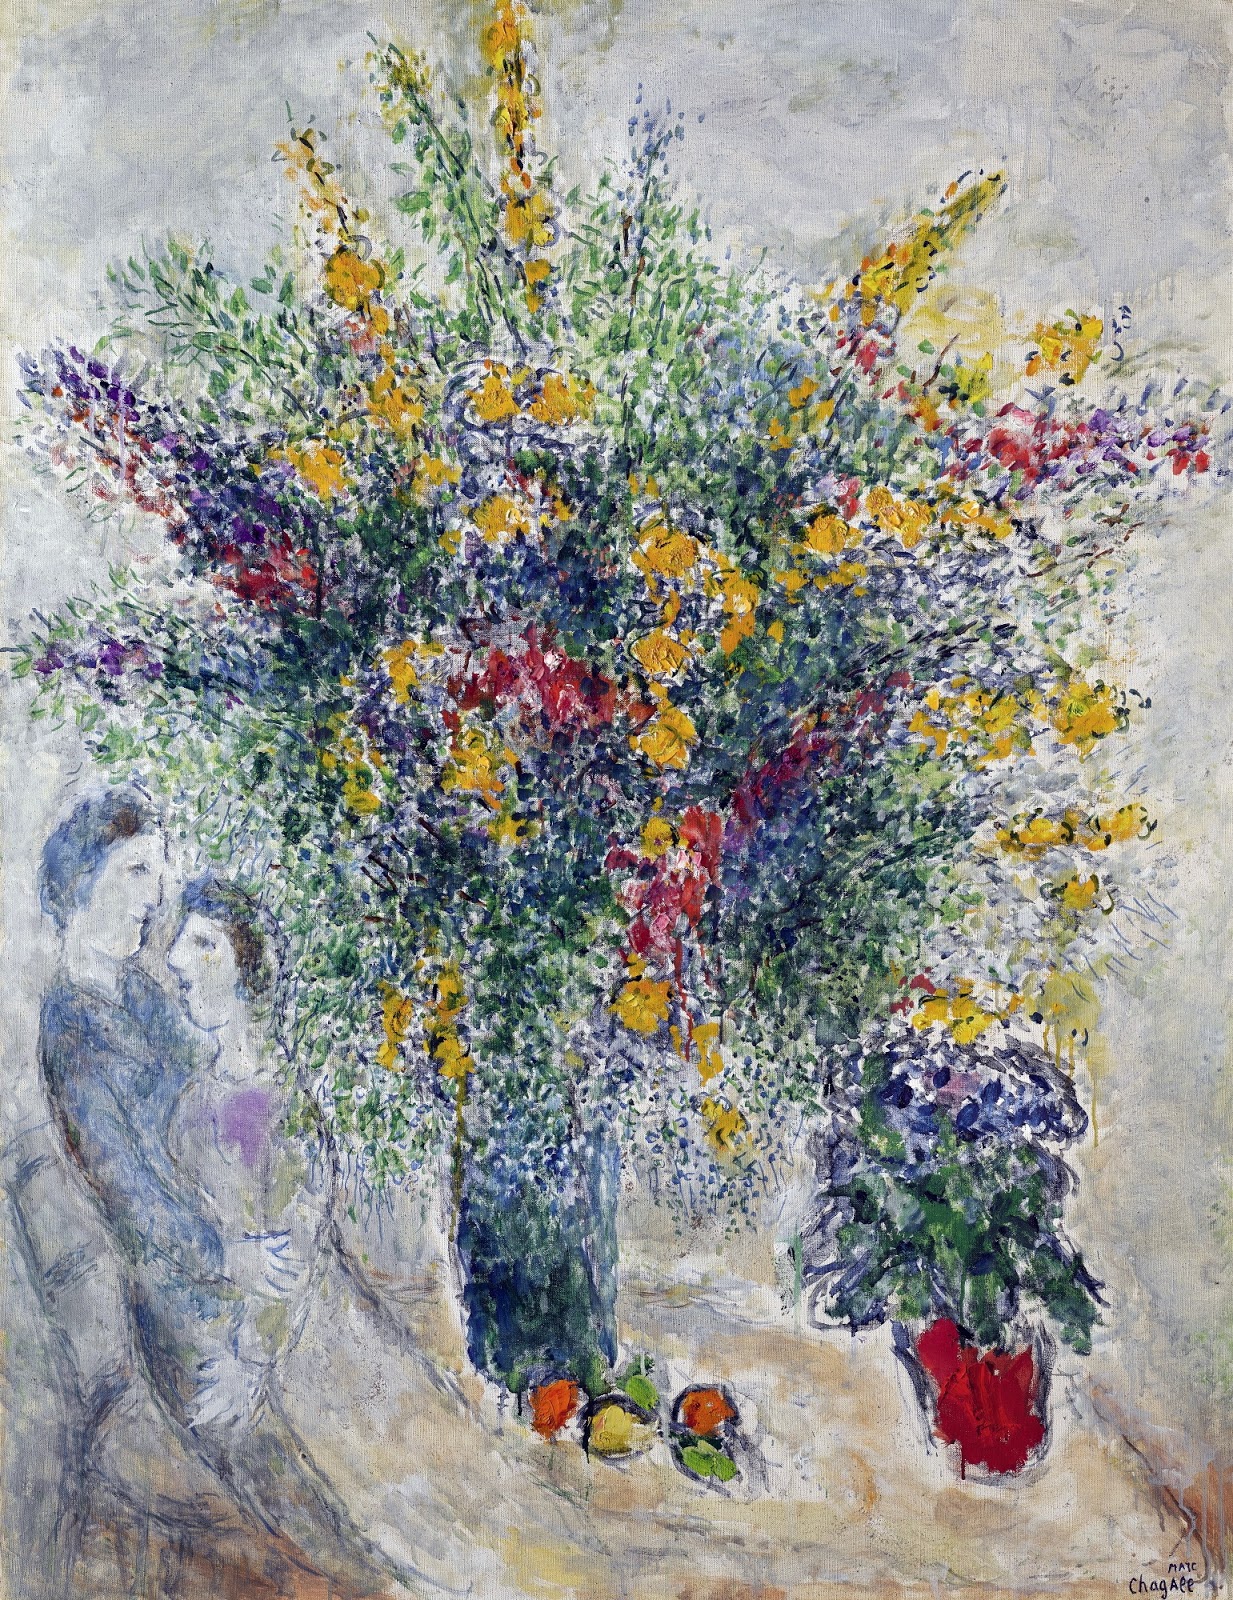 Marc+Chagall-1887-1985 (235).jpg